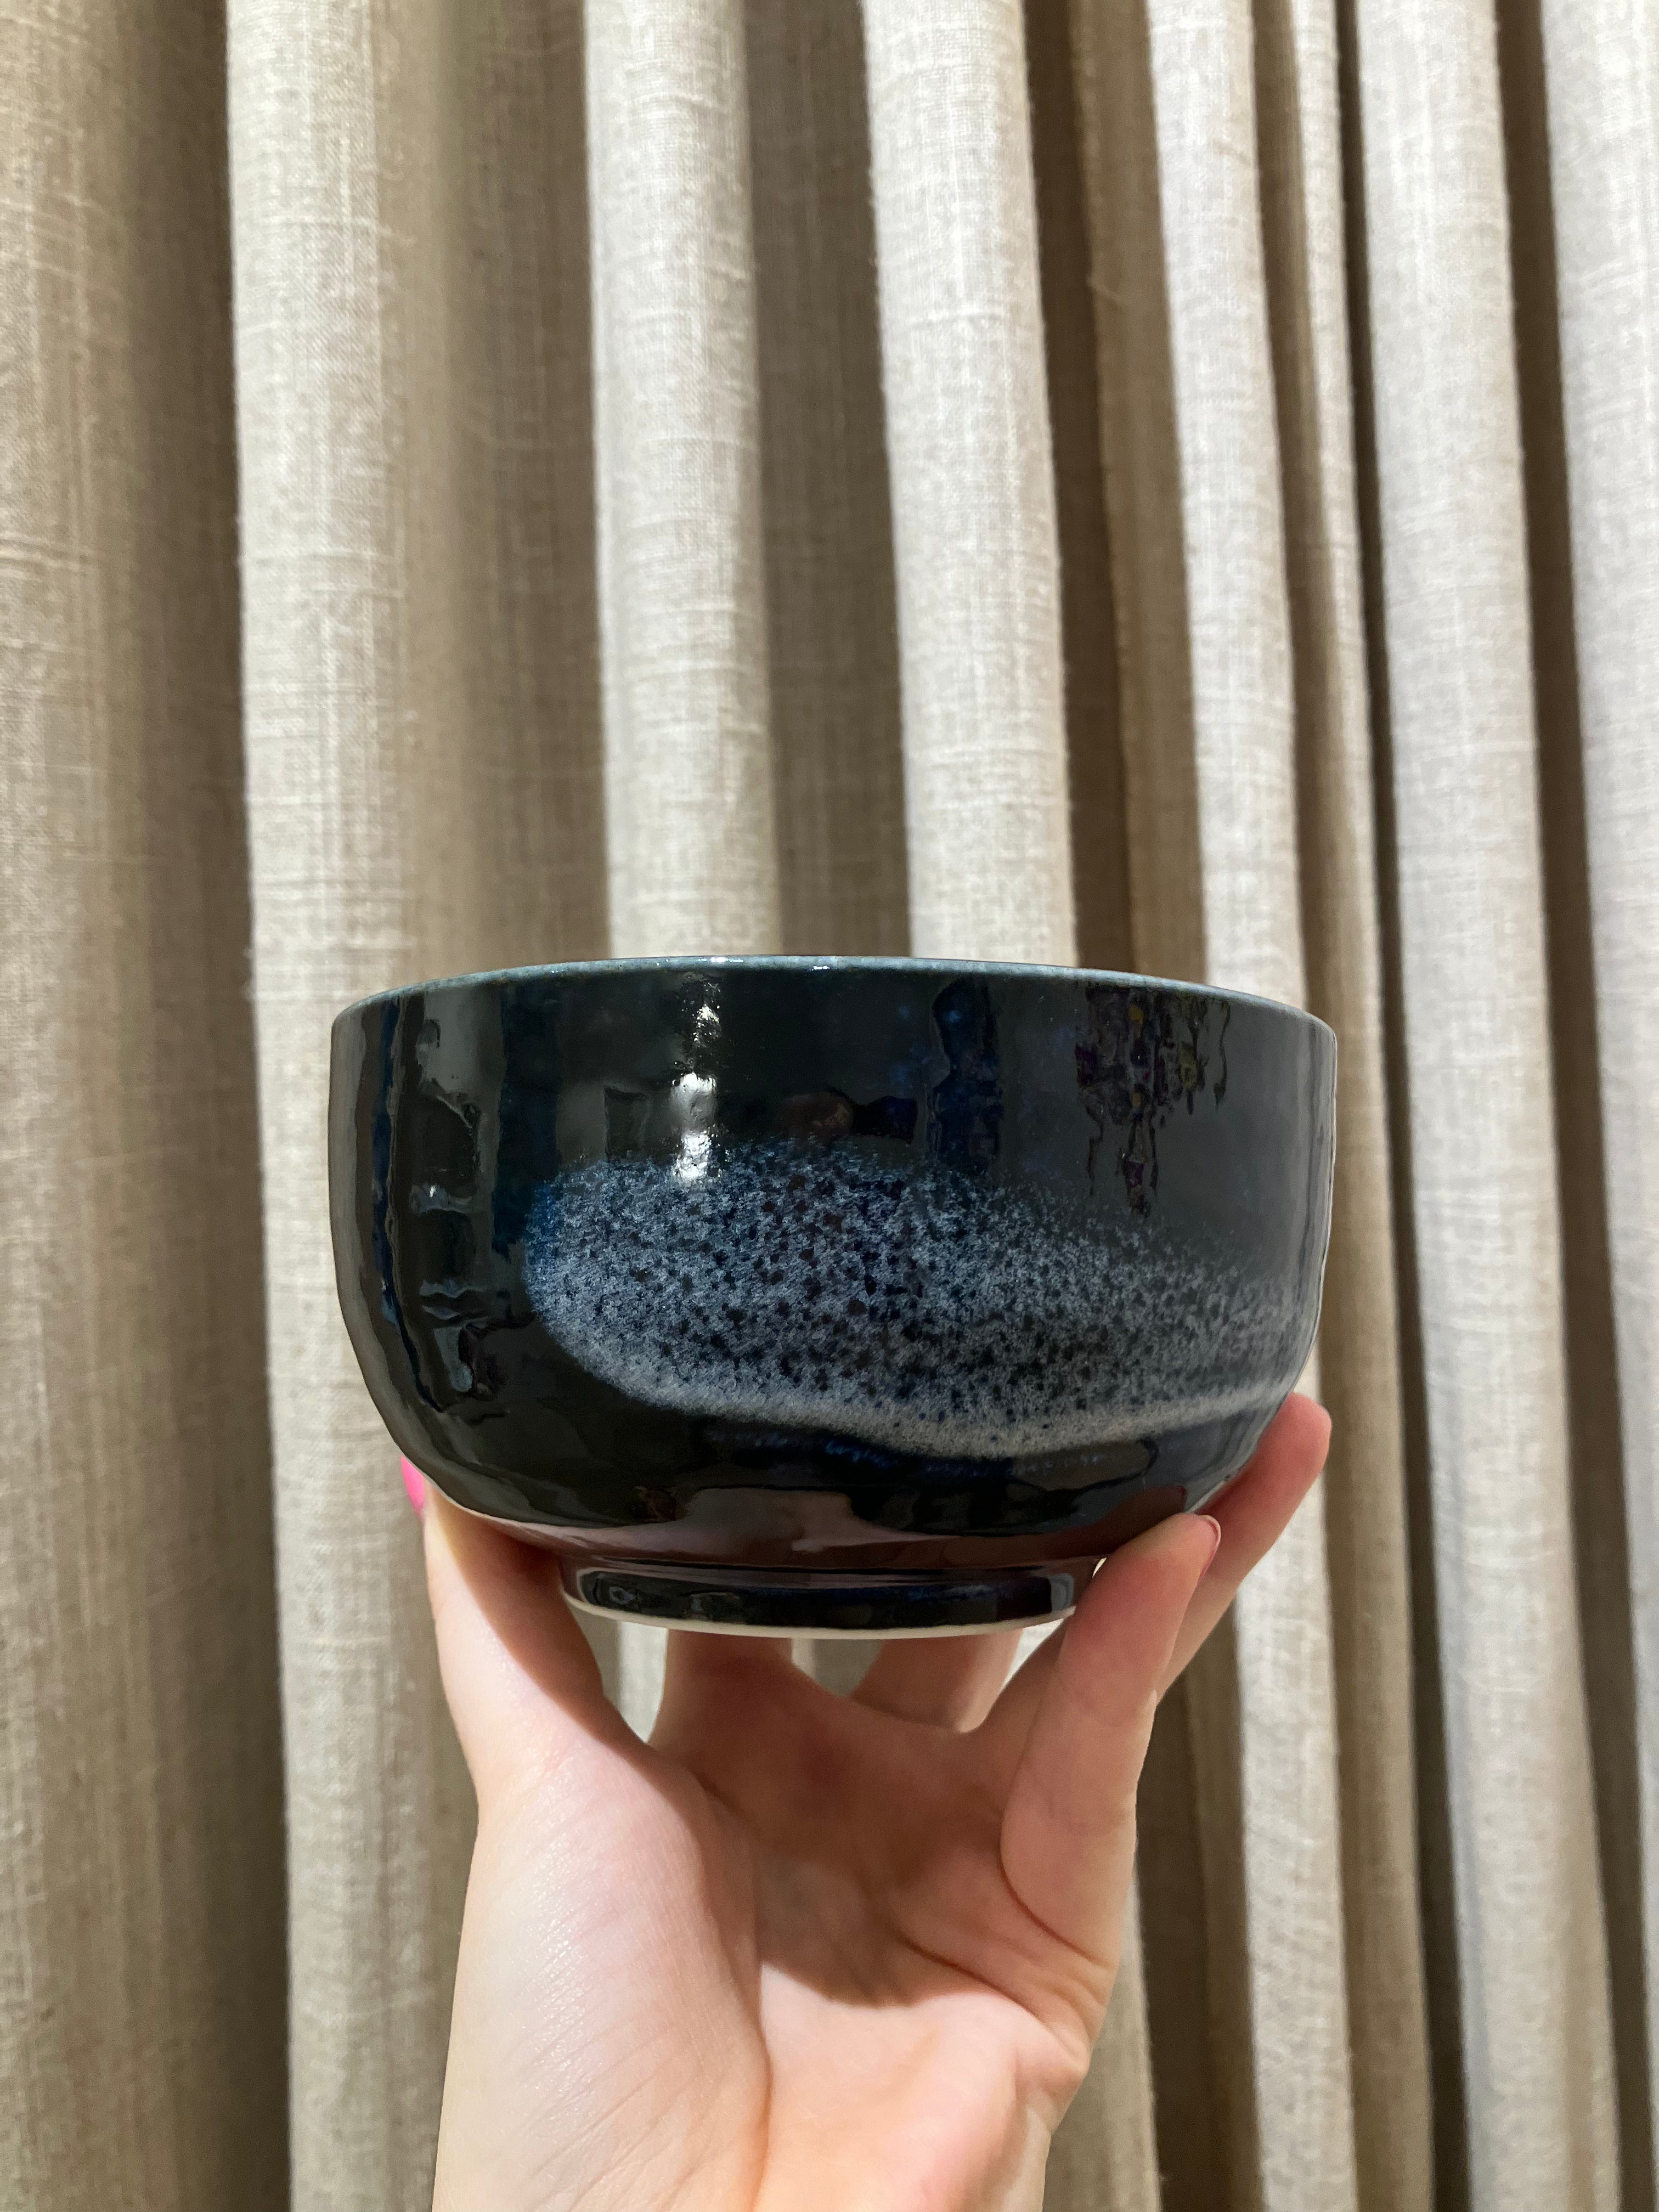 Matcha cup with dark blue glaze